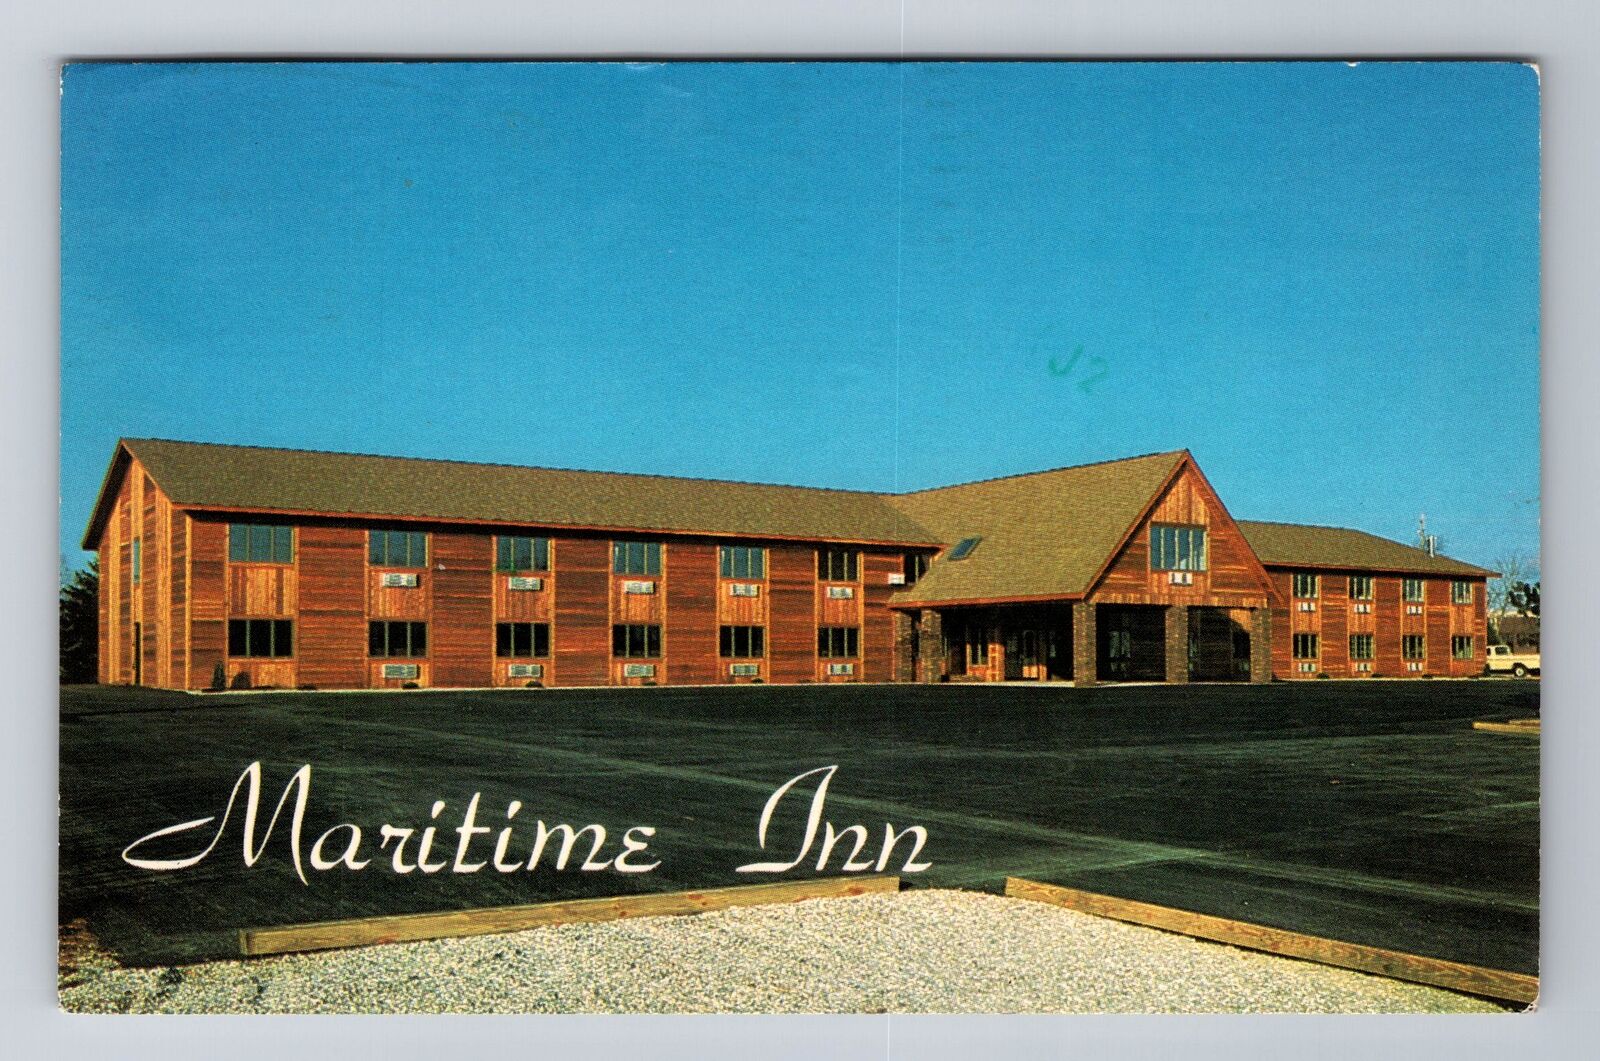 Sturgeon Bay WI-Wisconsin, Maritime Inn, Advertising, c1984 Vintage Postcard